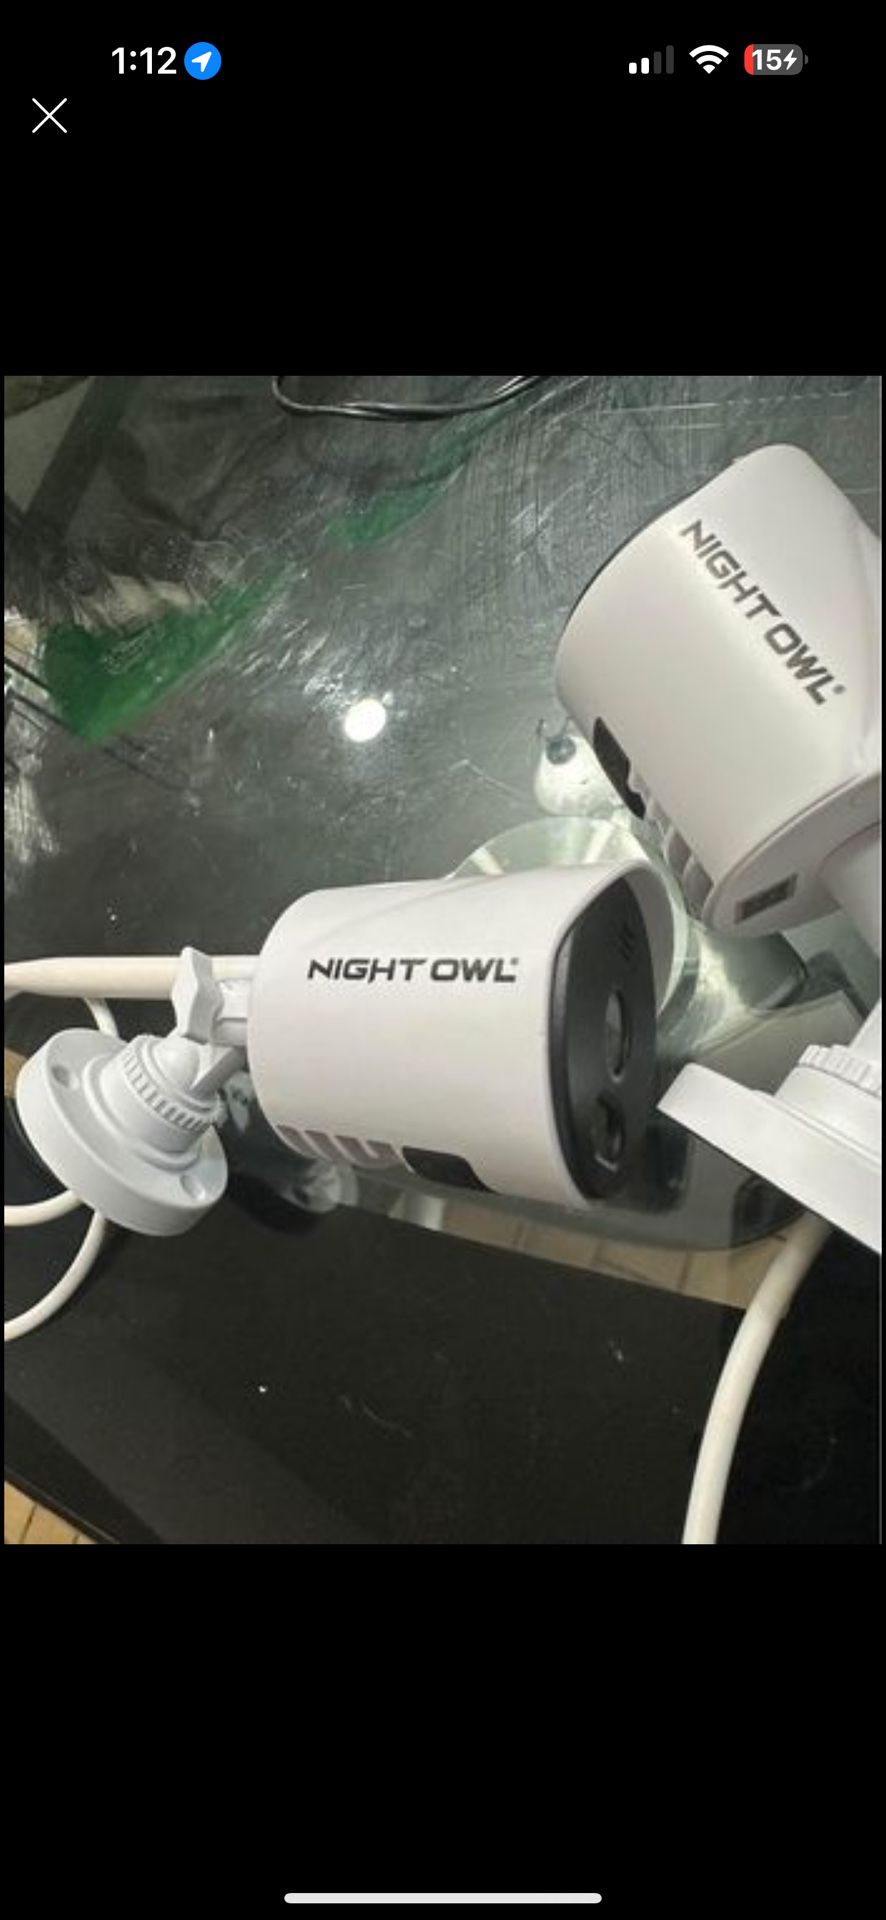 Night Owl Cameras 